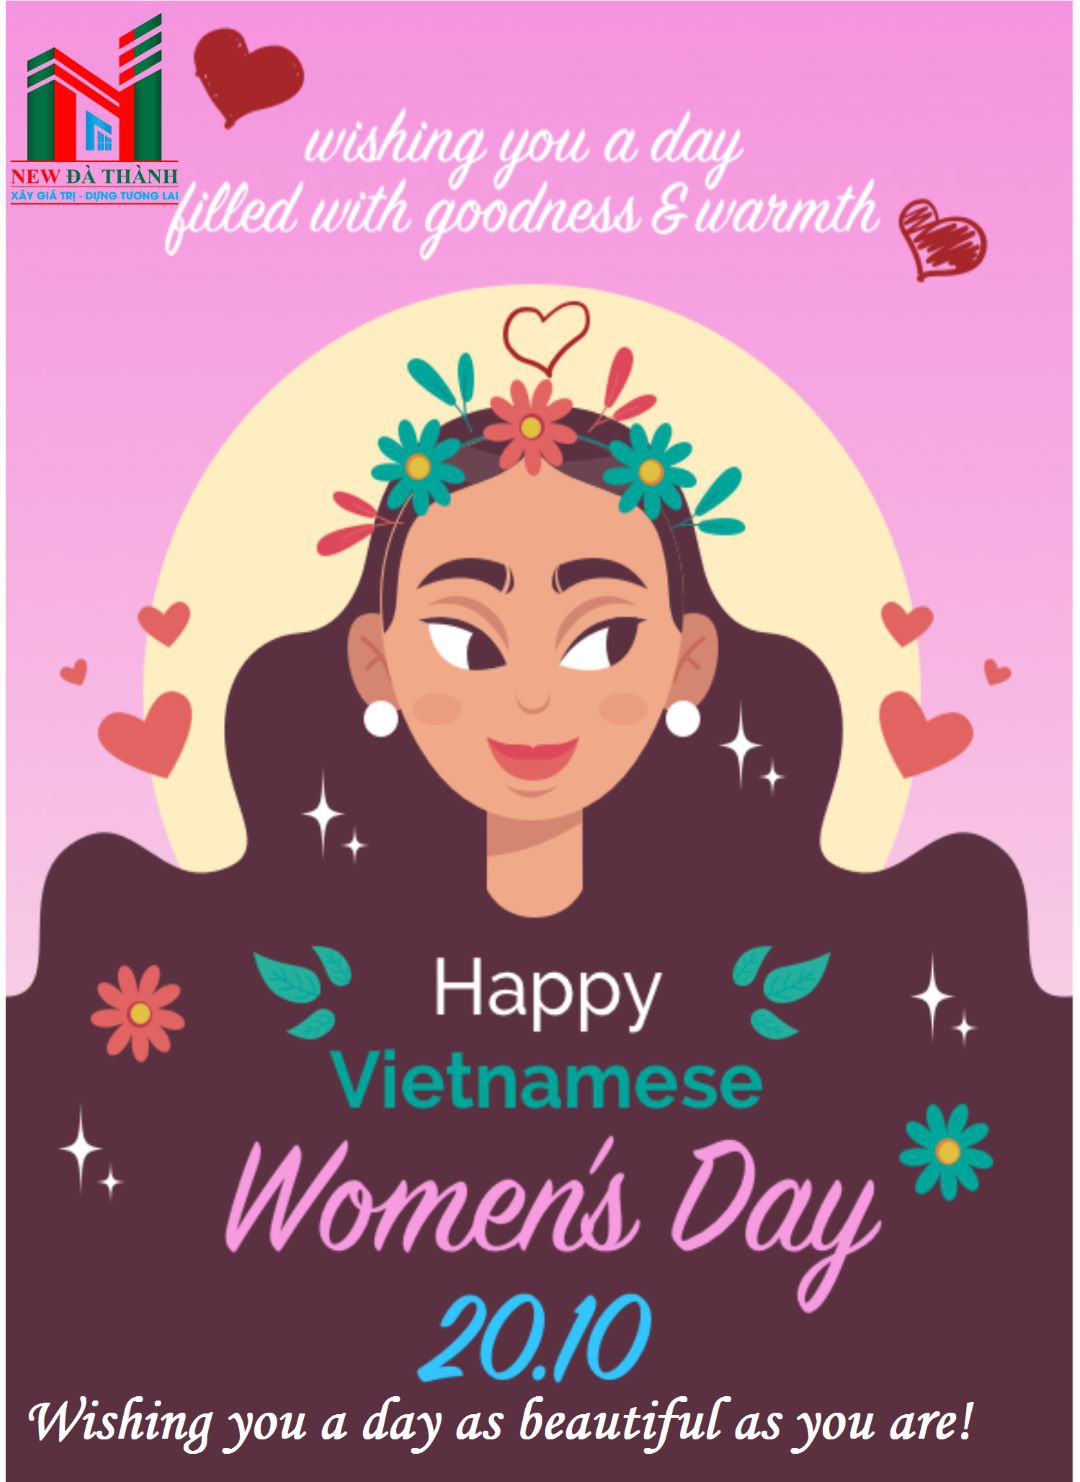 happy-vietnamese-womens-day-20-10-2019